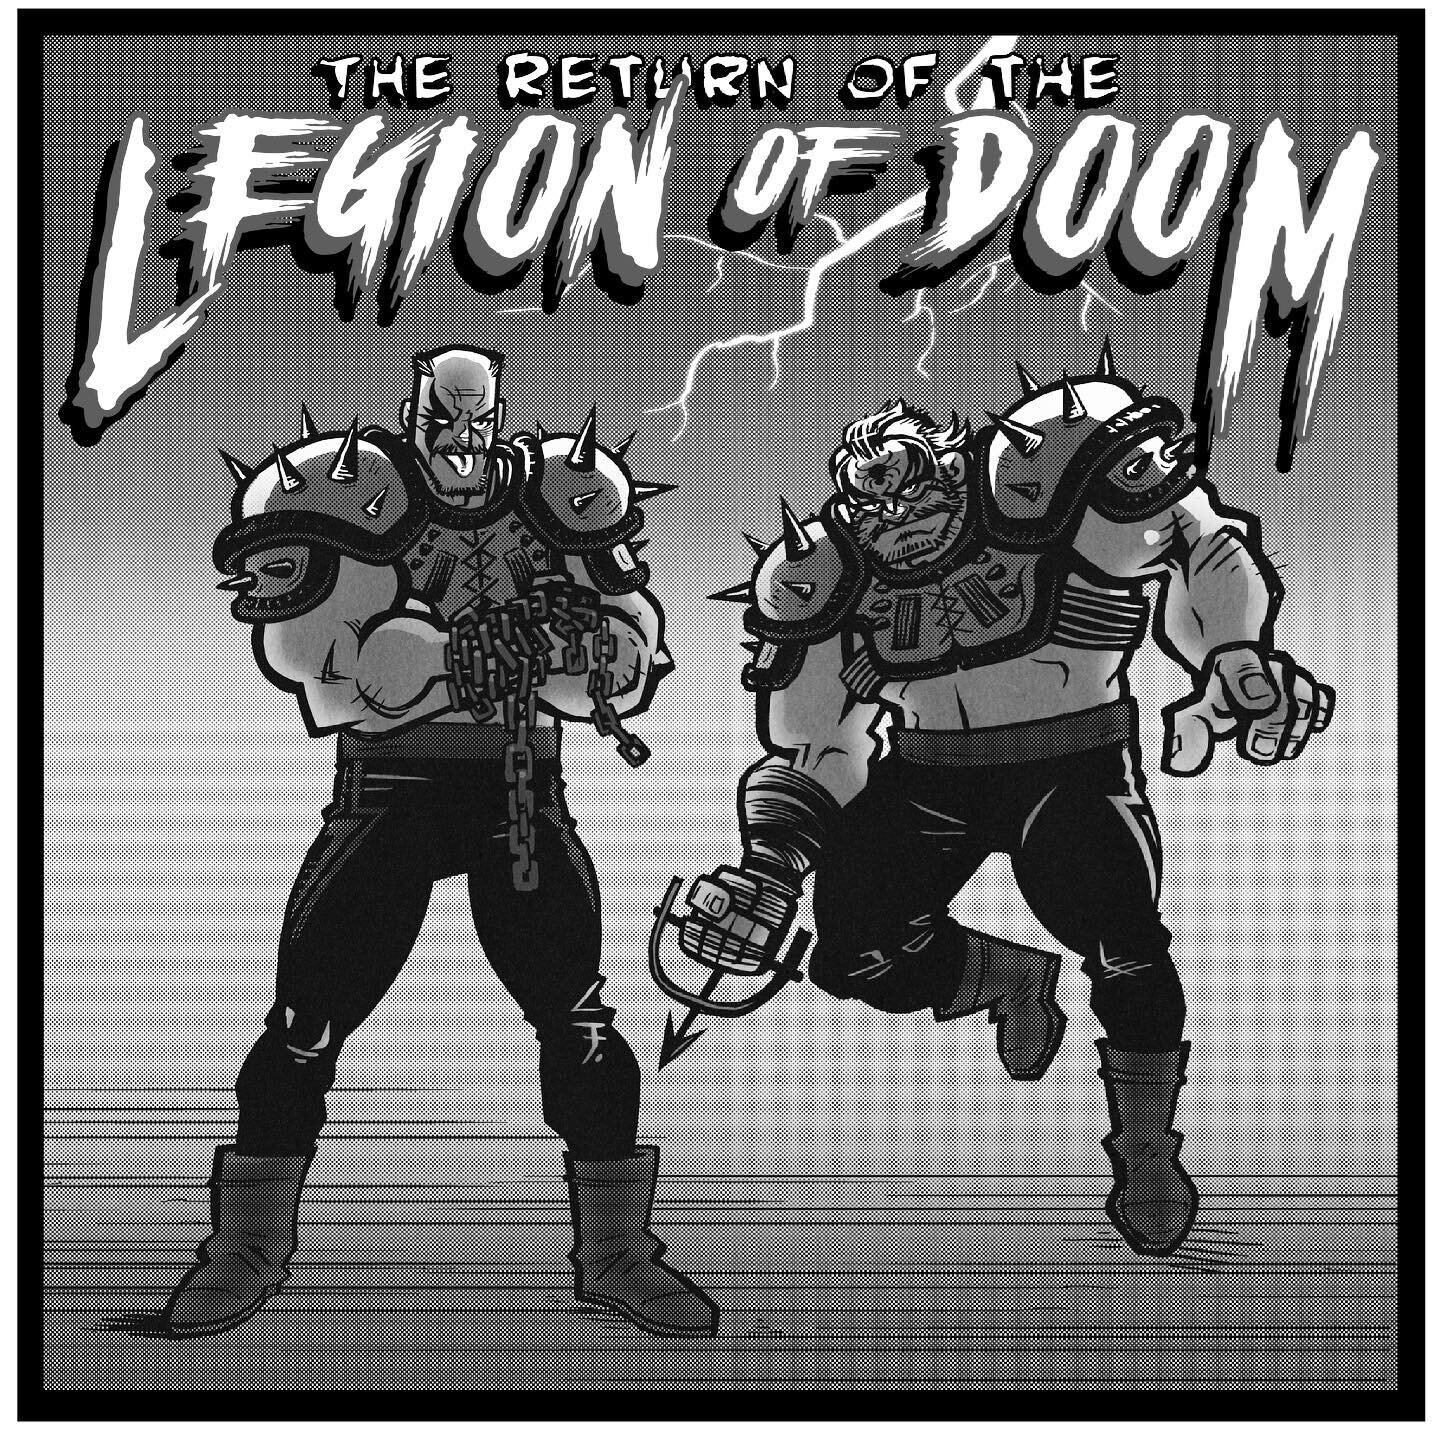 Coming soon...
@forthetitle 
.
.
.
#legionofdoom #lod #forthetitle #wrestlingfan #comics #thezigzone